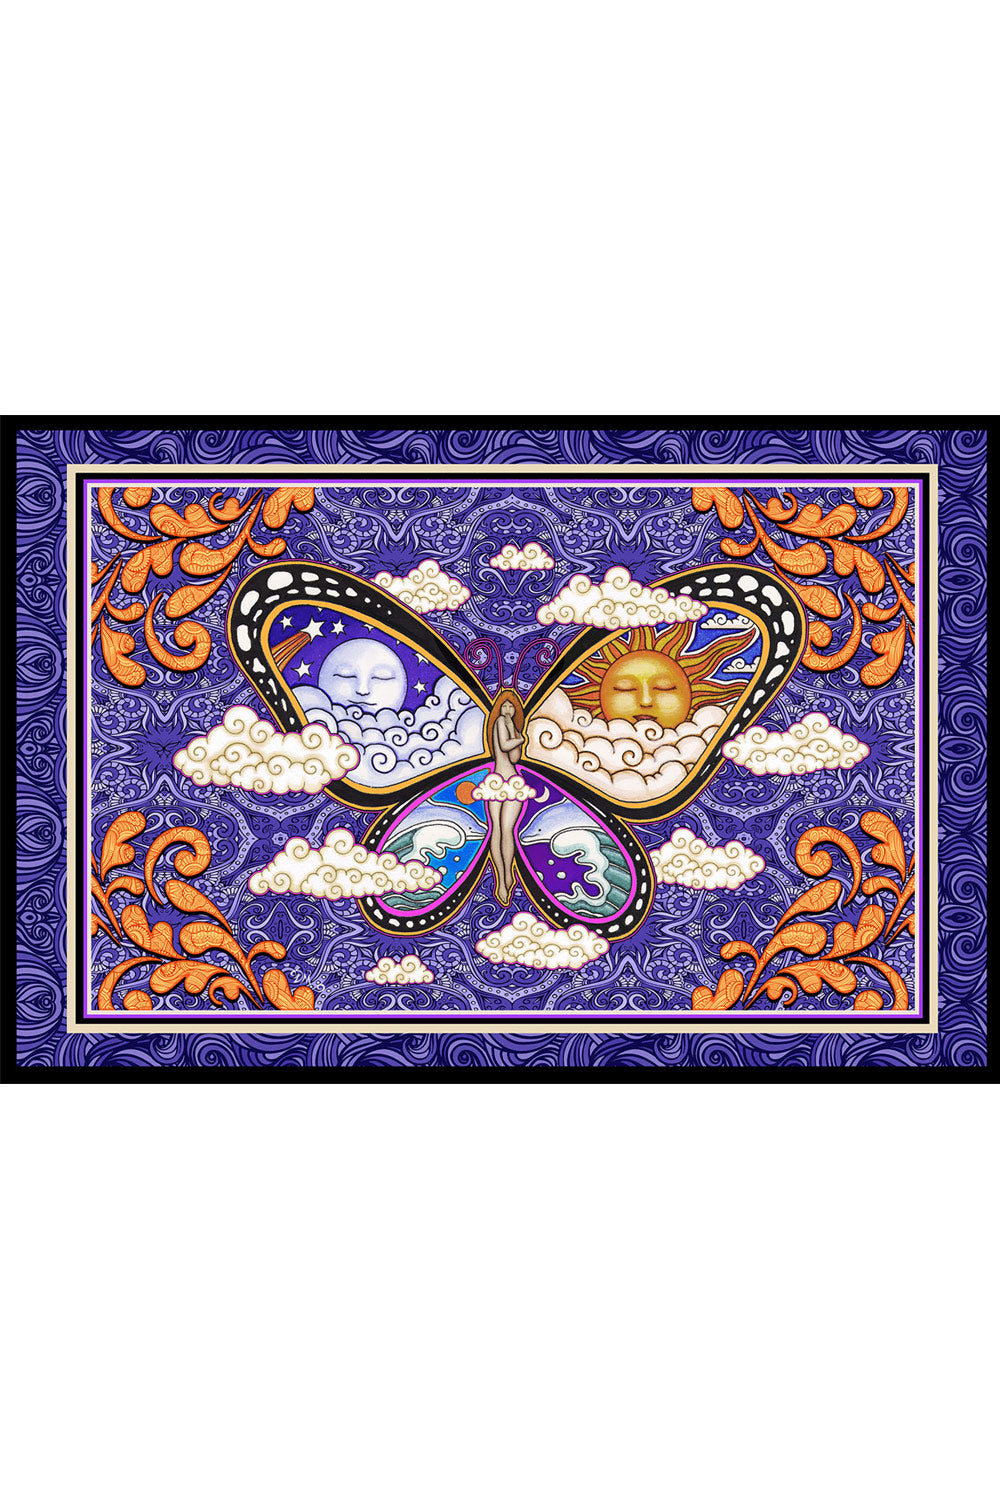 Dan Morris Butterfly Nymph Tapestry - HalfMoonMusic